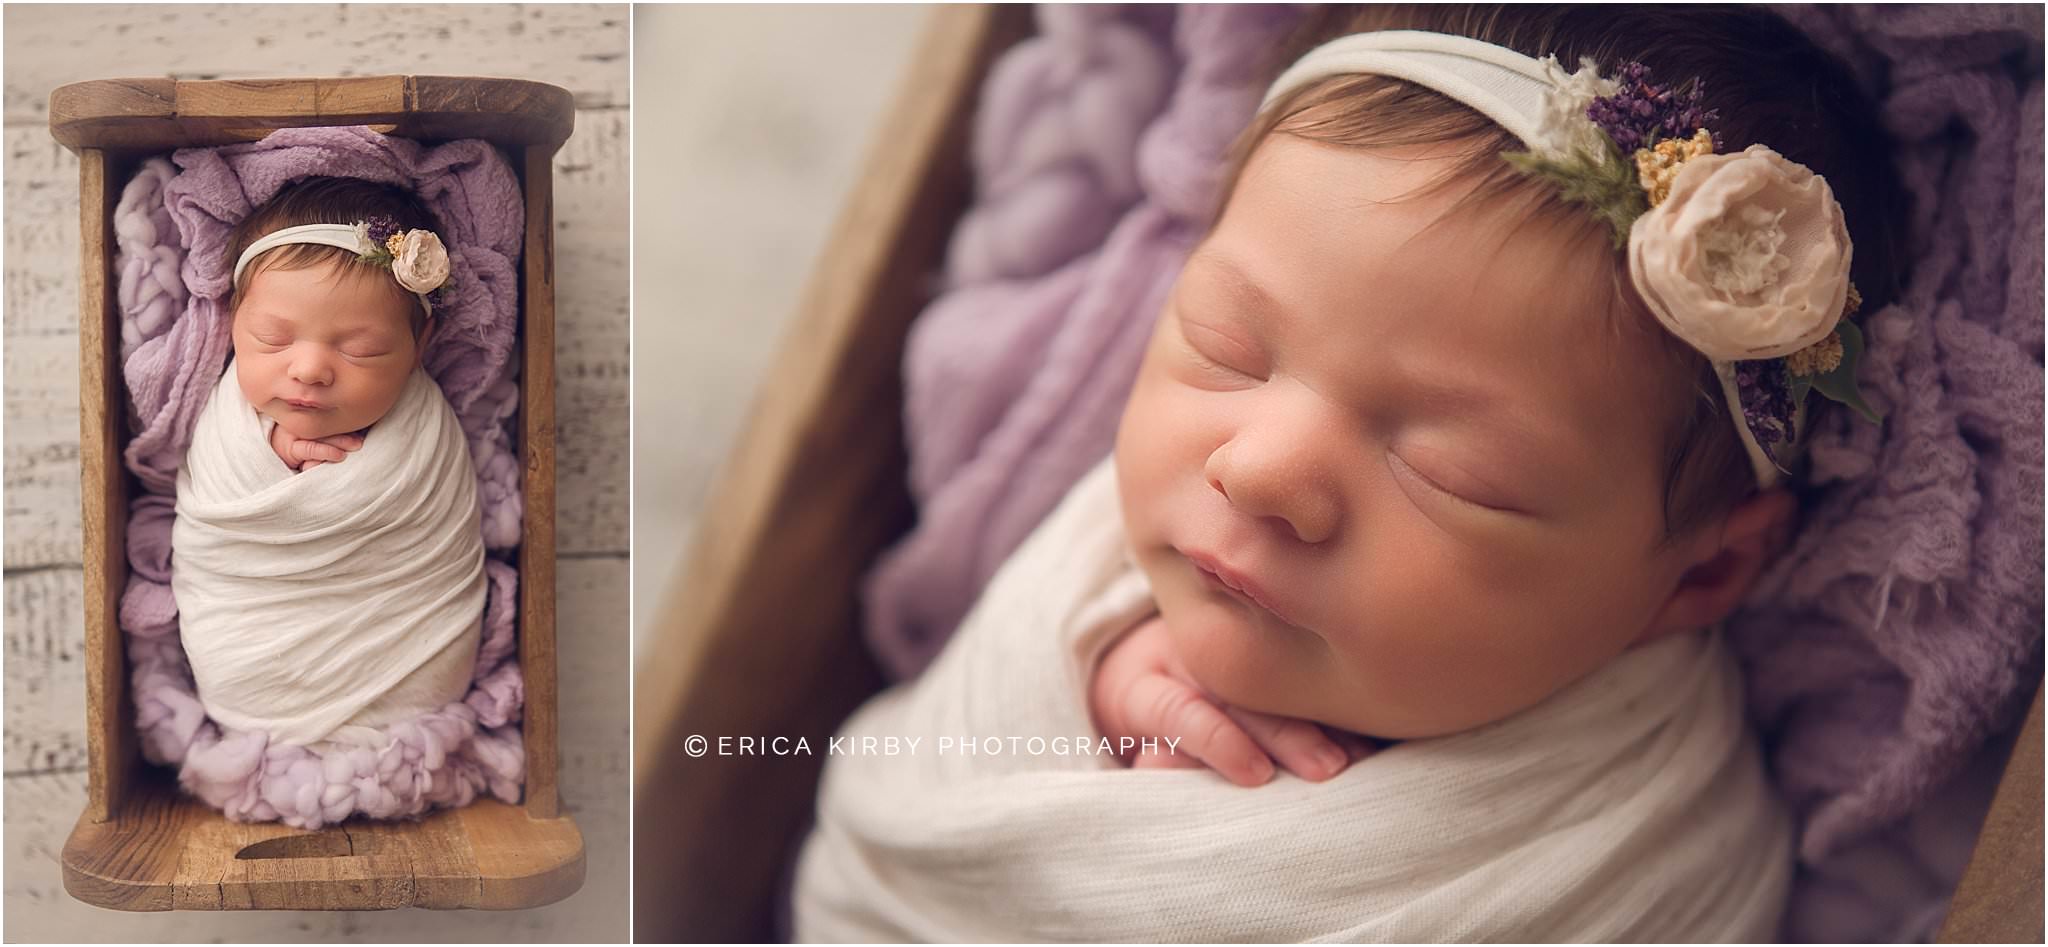 Newborn Photographers NW Arkansas - baby girl newborn photo session in Bentonville AR studio - Erica Kirby Photography